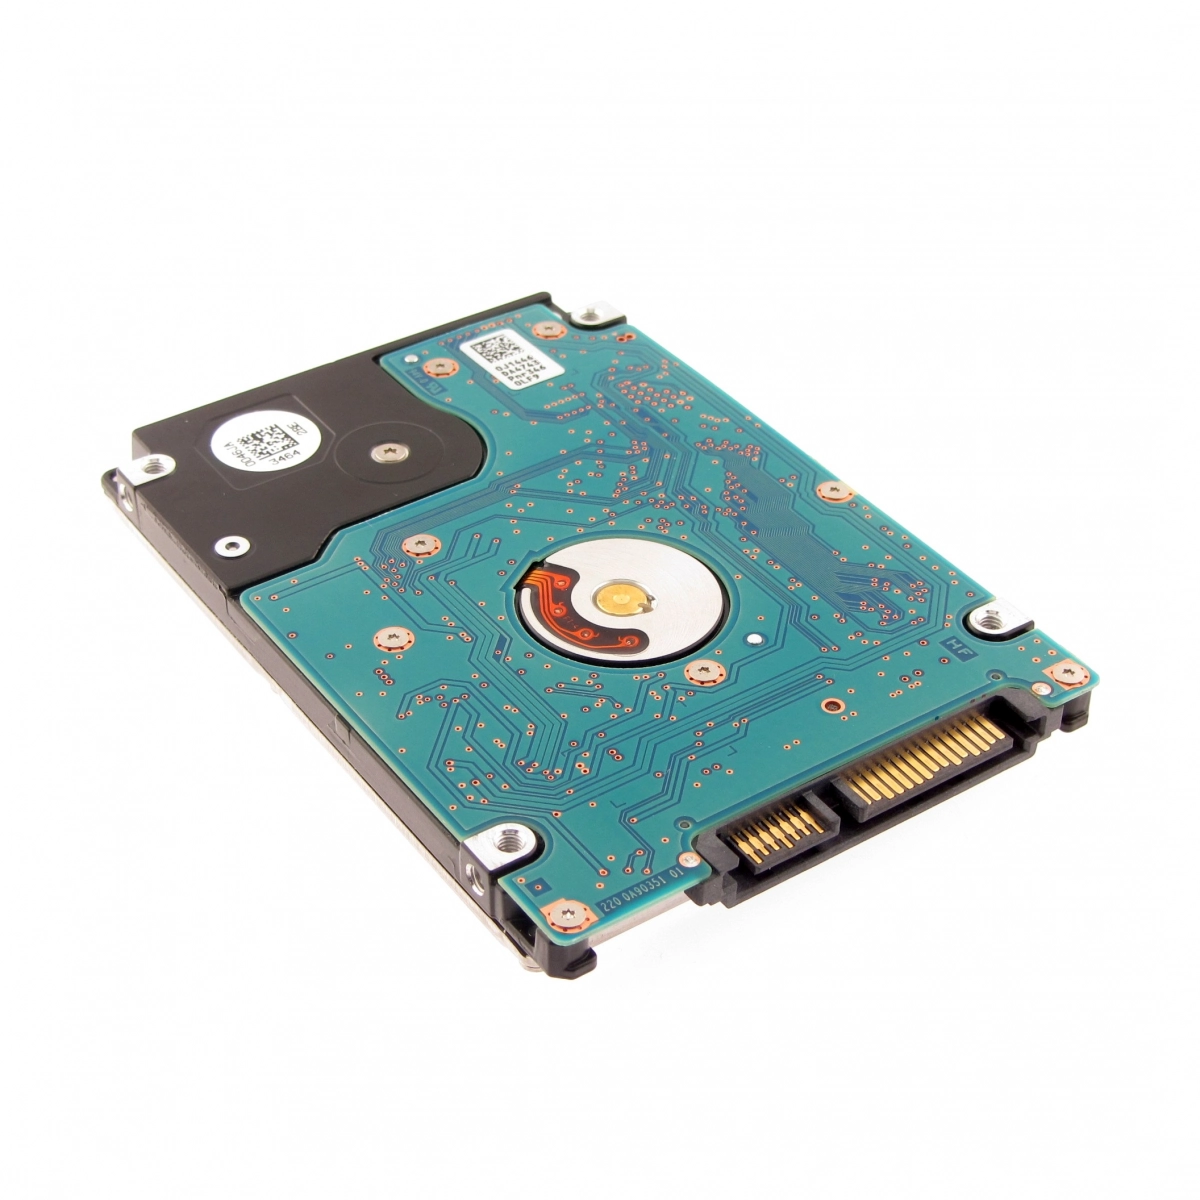 Notebook-Festplatte 500GB, 7200rpm, 128MB für ACER Extensa 5630Z